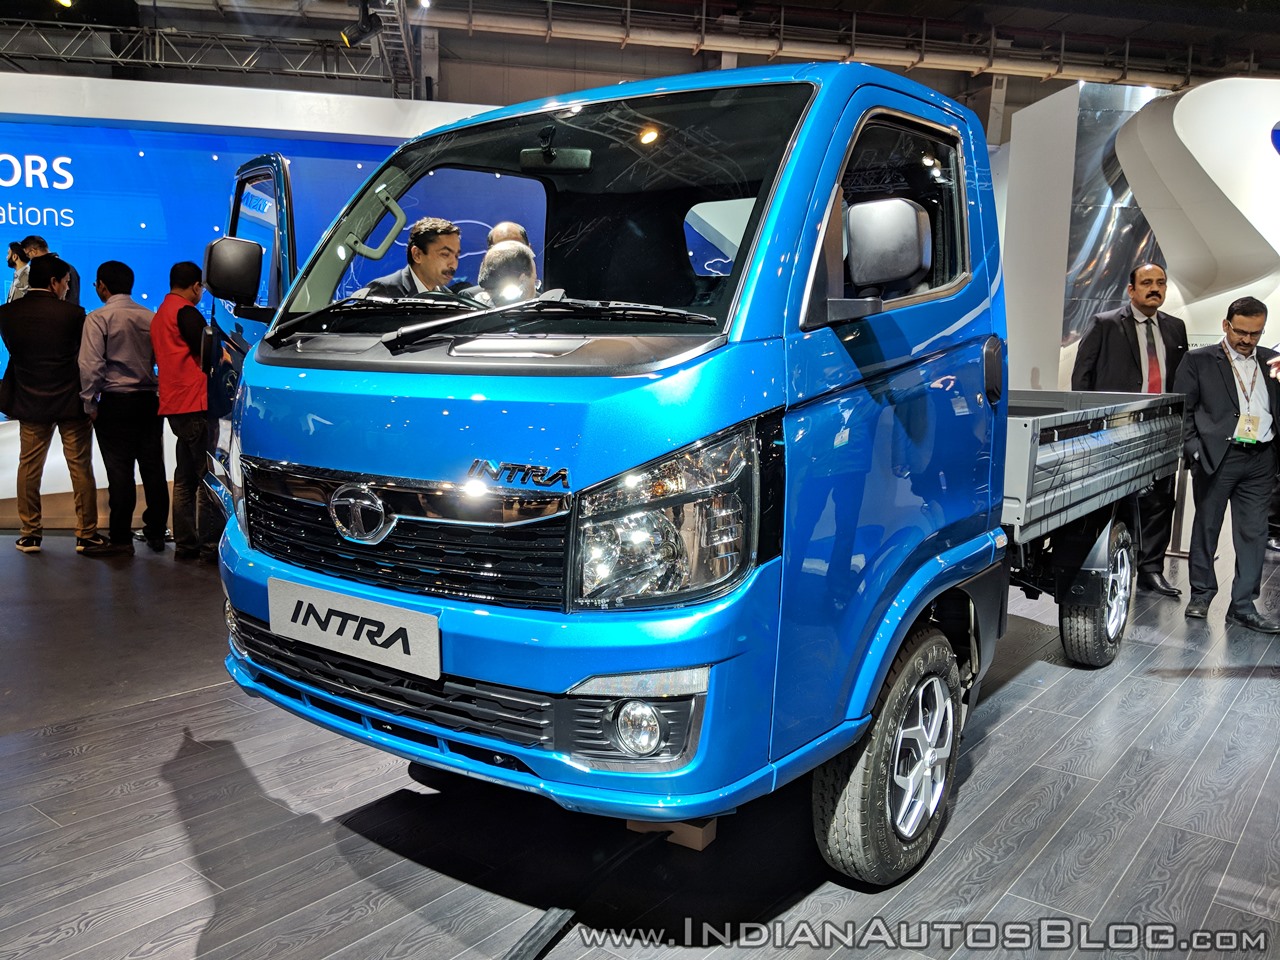 Tata Intra 'Venture' passenger van 